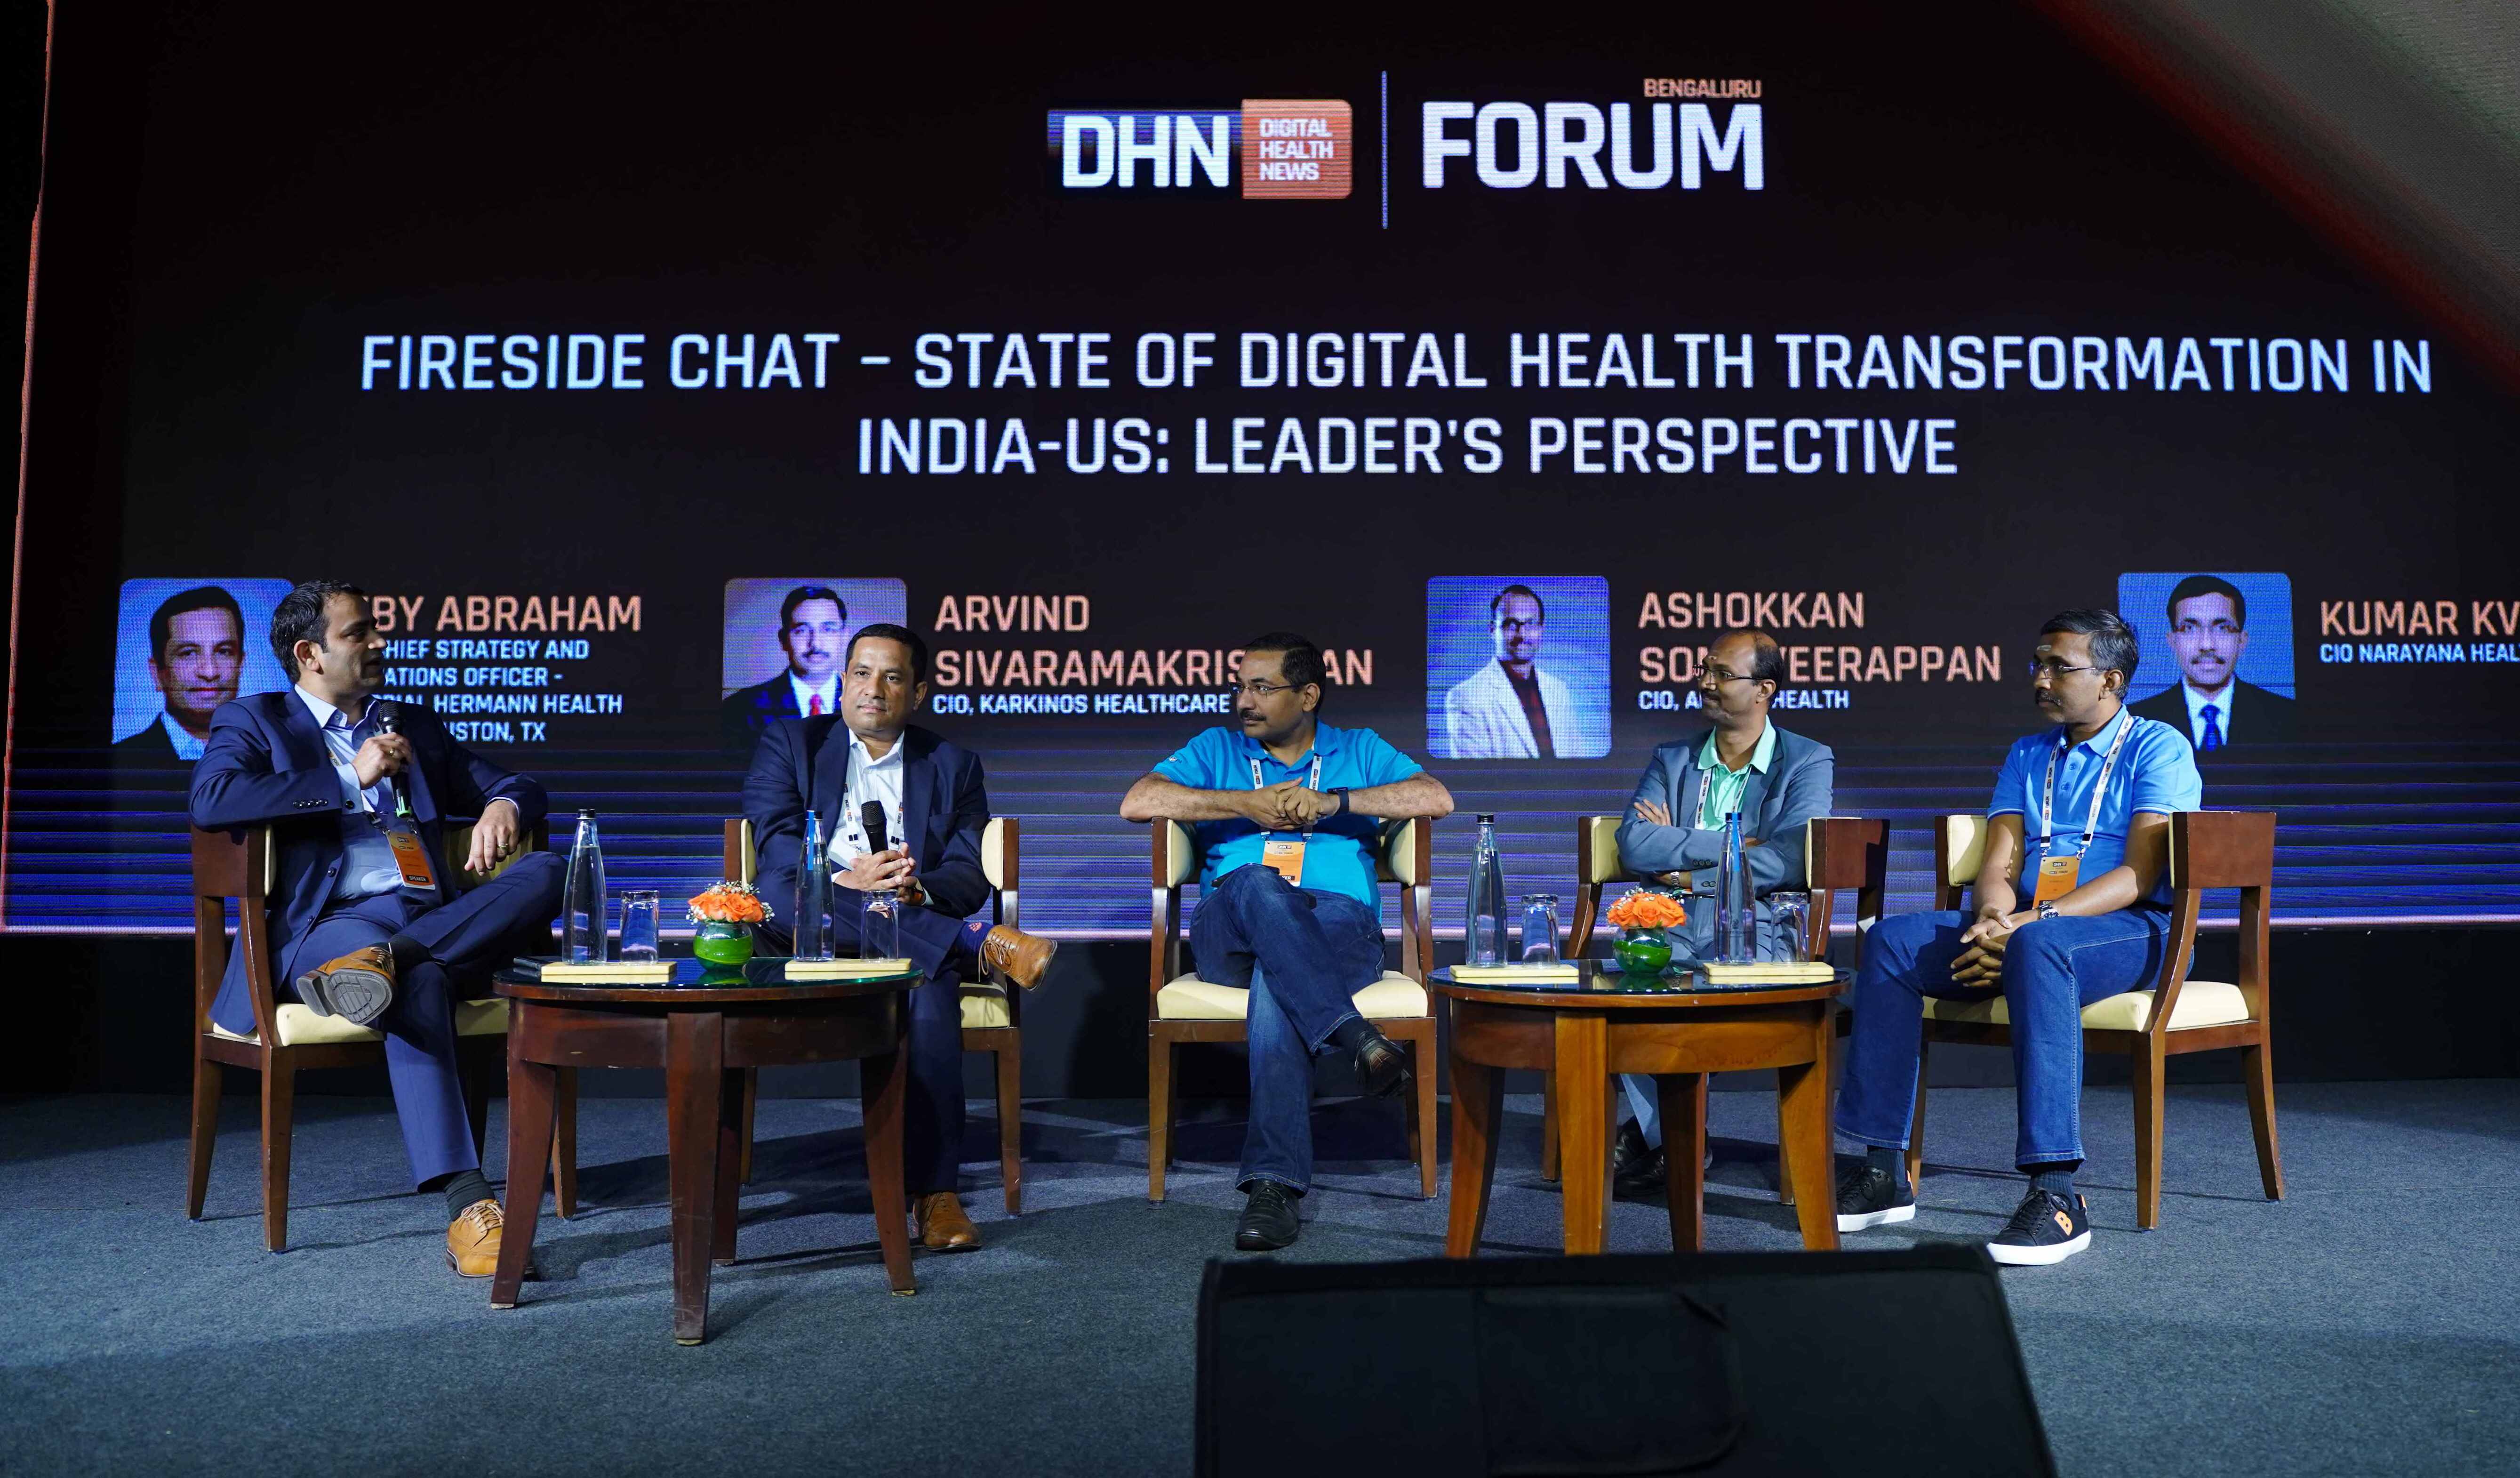 dhn-forum-bengaluru-ignites-digital-healthcare-with-tech-adoption-infra-ai-cybersecurity